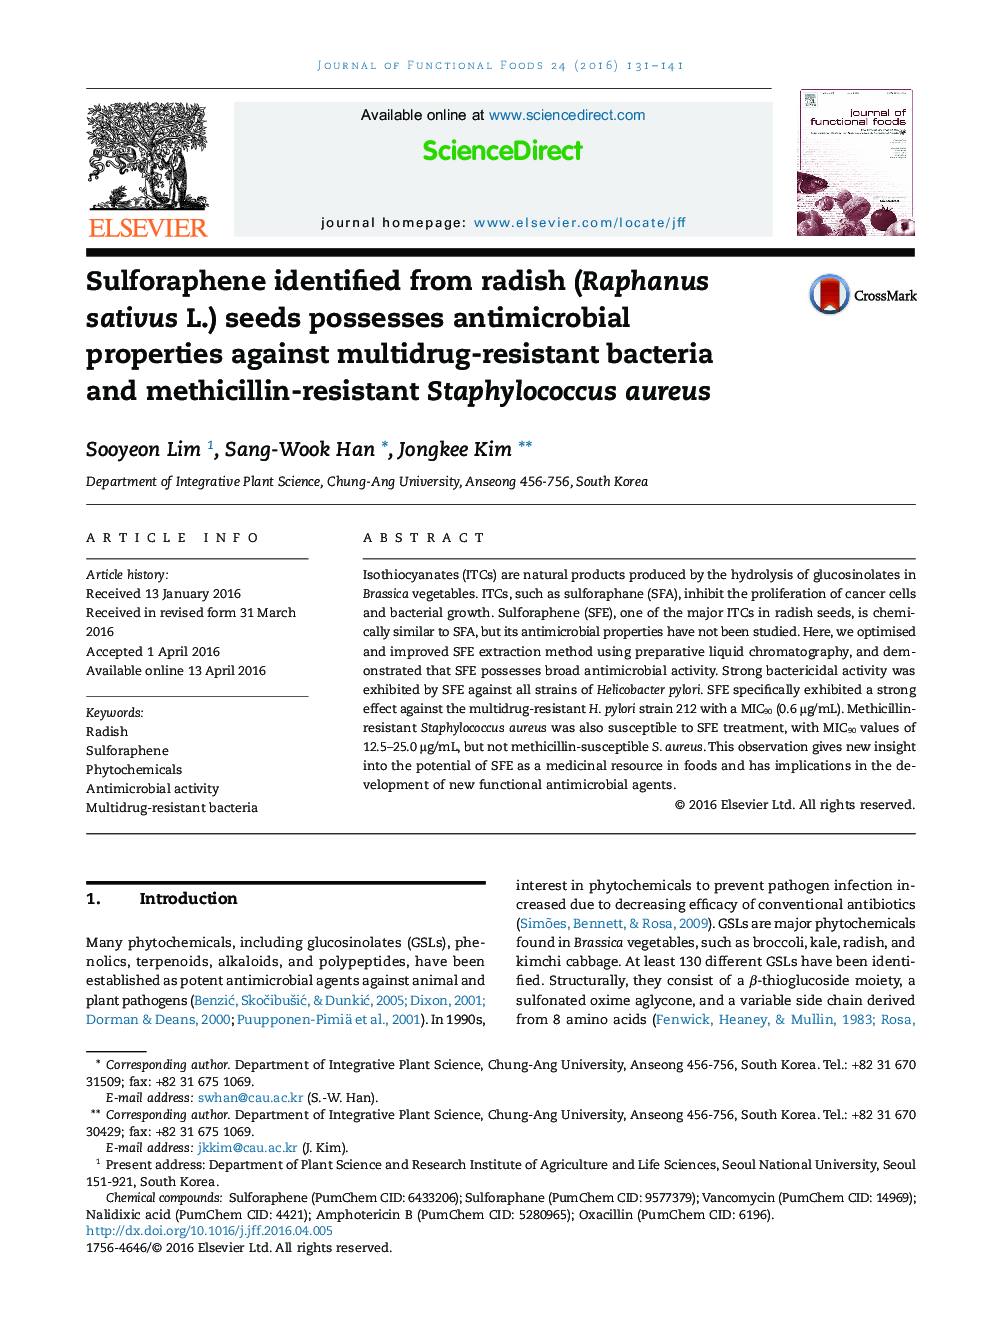 Sulforaphene identified from radish (Raphanus sativus L.) seeds possesses antimicrobial properties against multidrug-resistant bacteria and methicillin-resistant Staphylococcus aureus